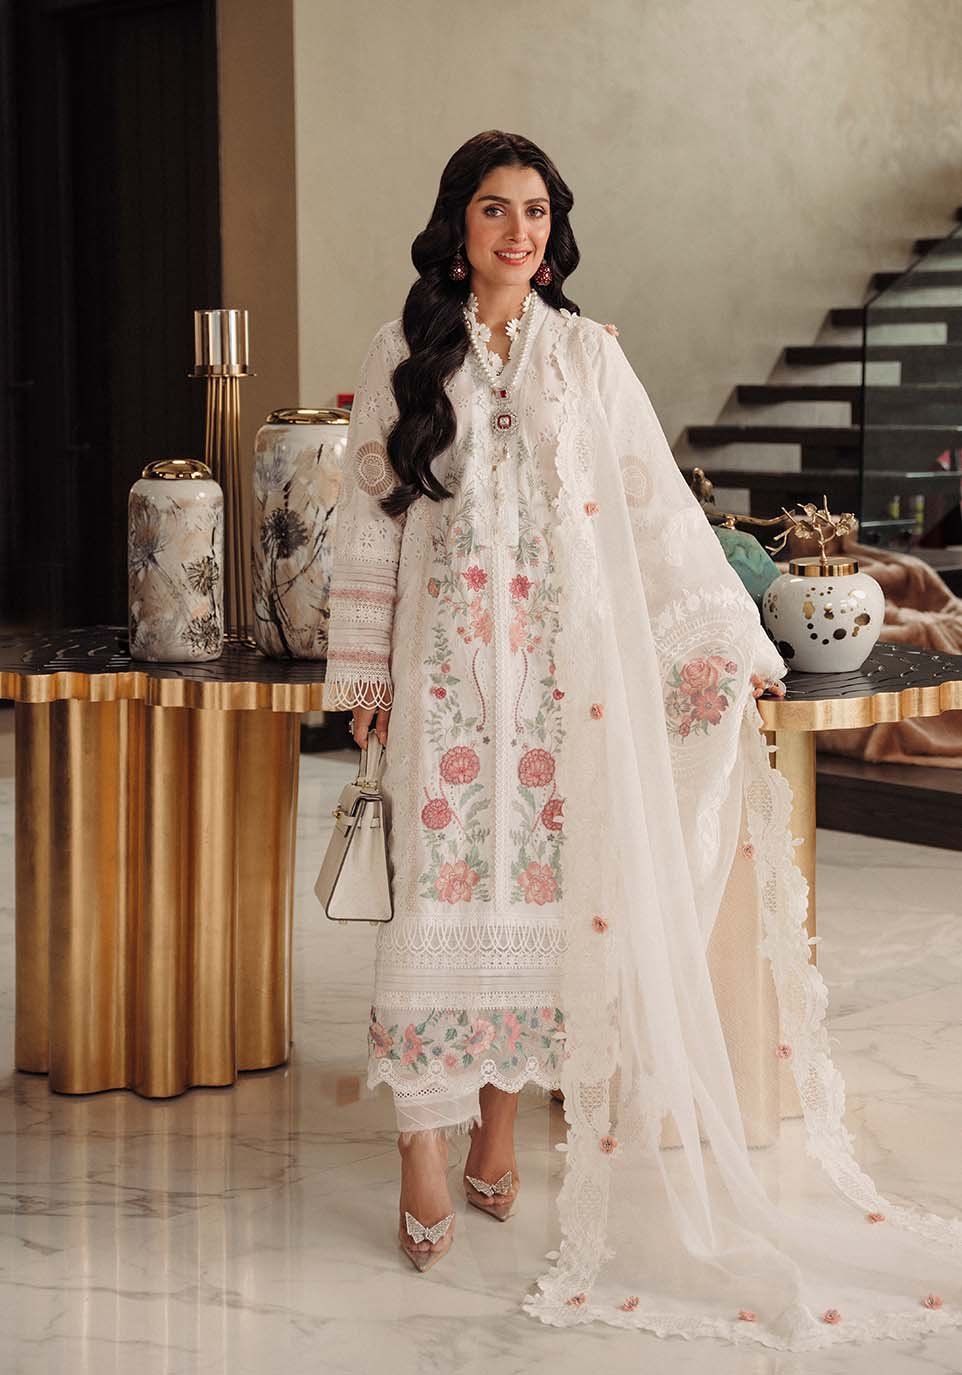 Blooms in White: New Pakistani Dress Design